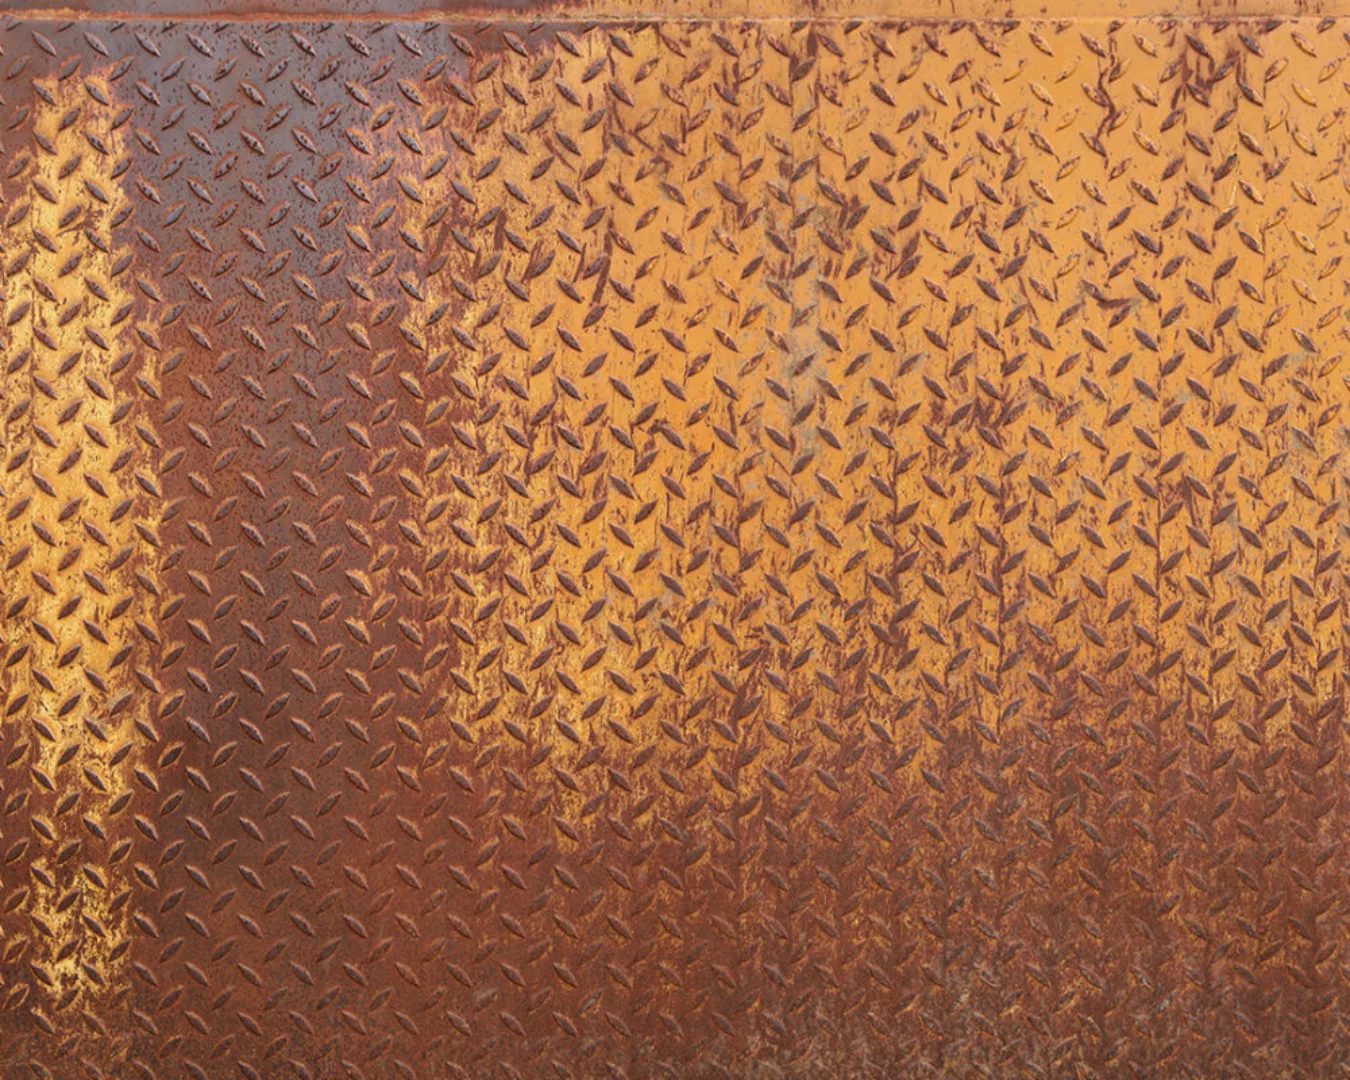 Fototapete "Rostige Platte" 4,00x2,50 m / Glattvlies Perlmutt günstig online kaufen